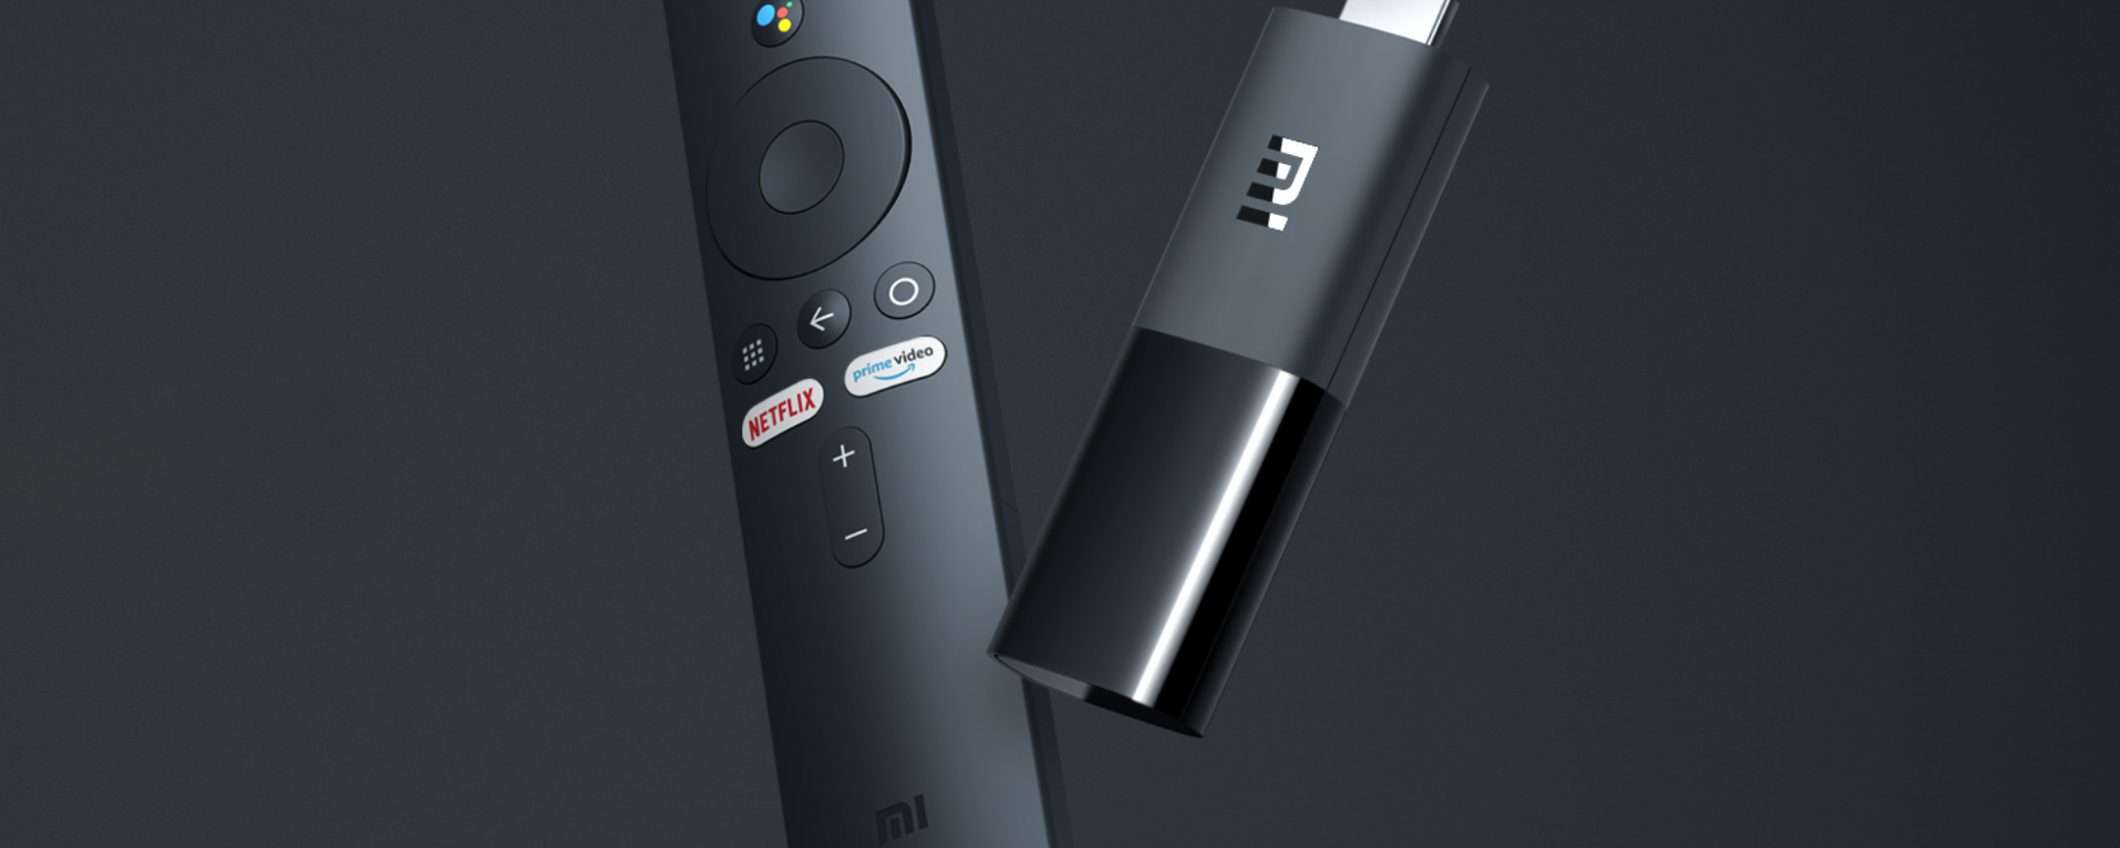 Xiaomi Mi TV Stick a 29,99 euro: IMPERDIBILE